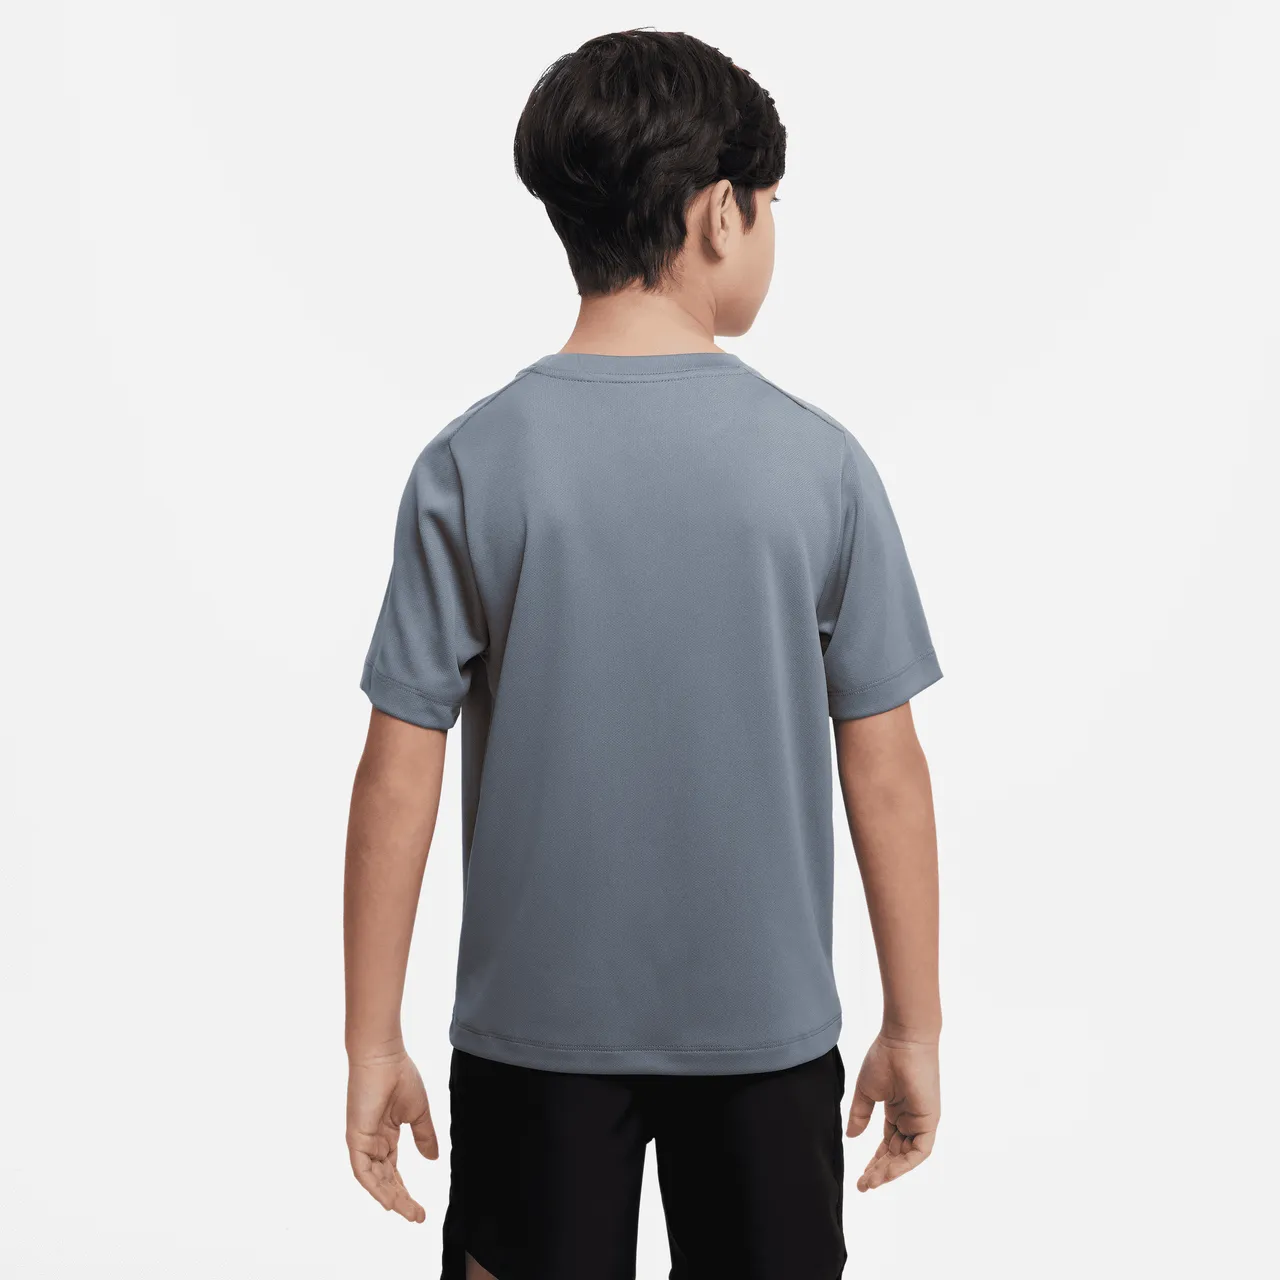 Nike Multi Older Kids' (Boys') Dri-FIT Graphic Training Top - Grey - Polyester